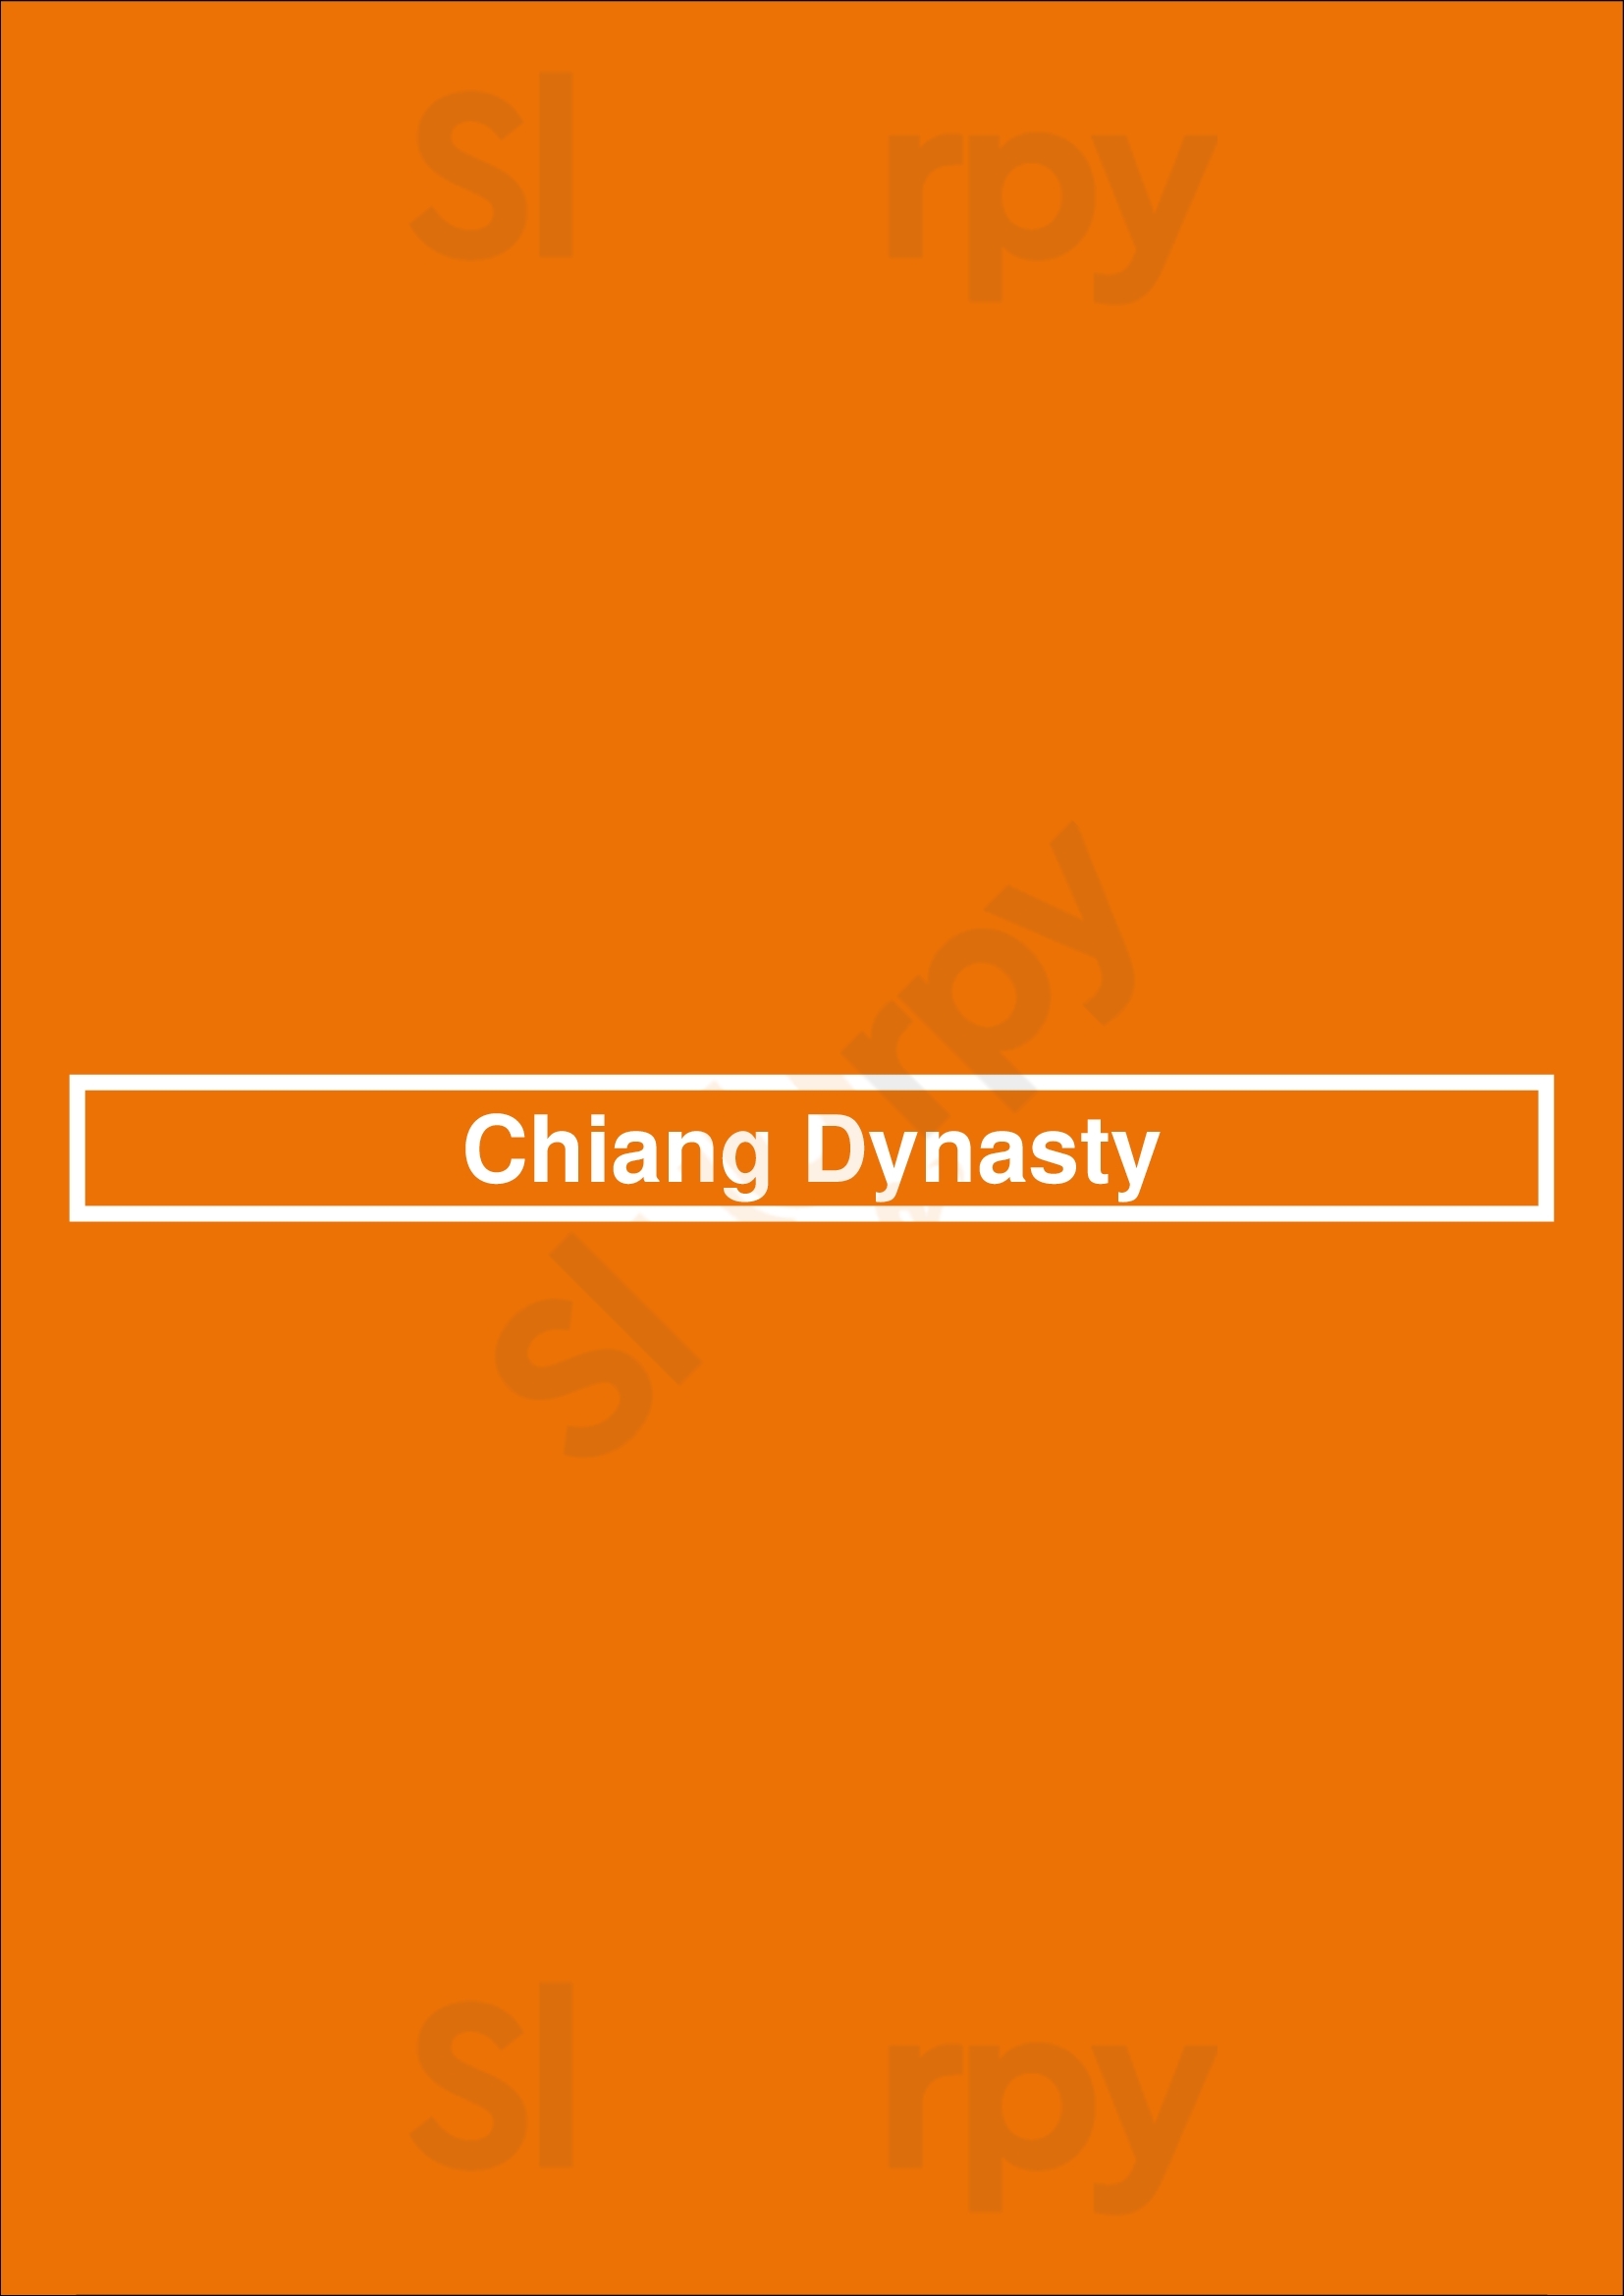 Chiang Dynasty Maastricht Menu - 1